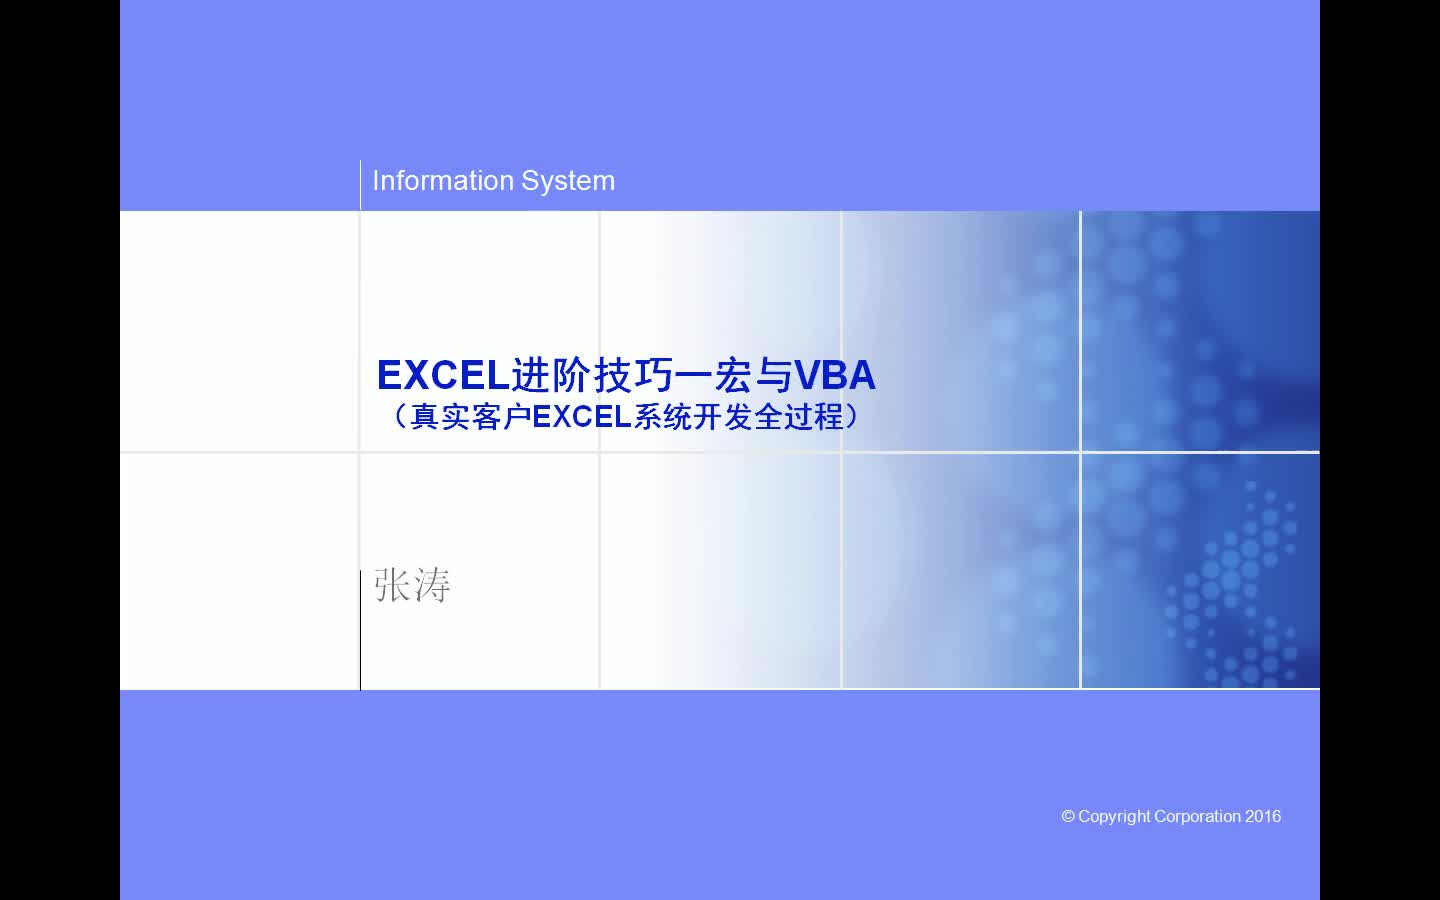 EXCEL进阶技巧一宏与VBA真实客户EXCEL系统开发全过程